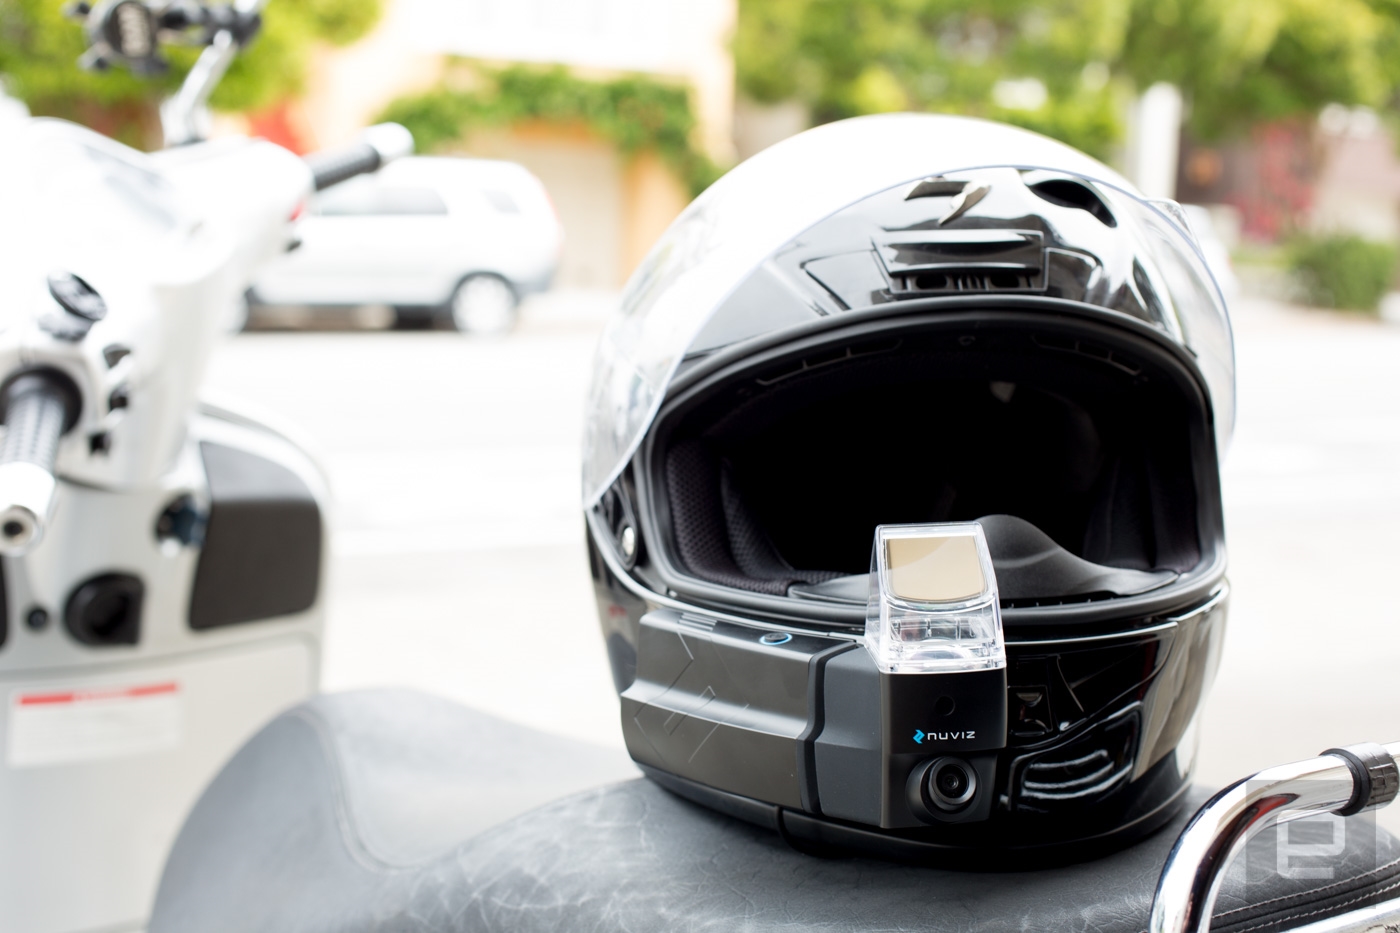 Motorcycle helmets finally get decent heads-up display navigation